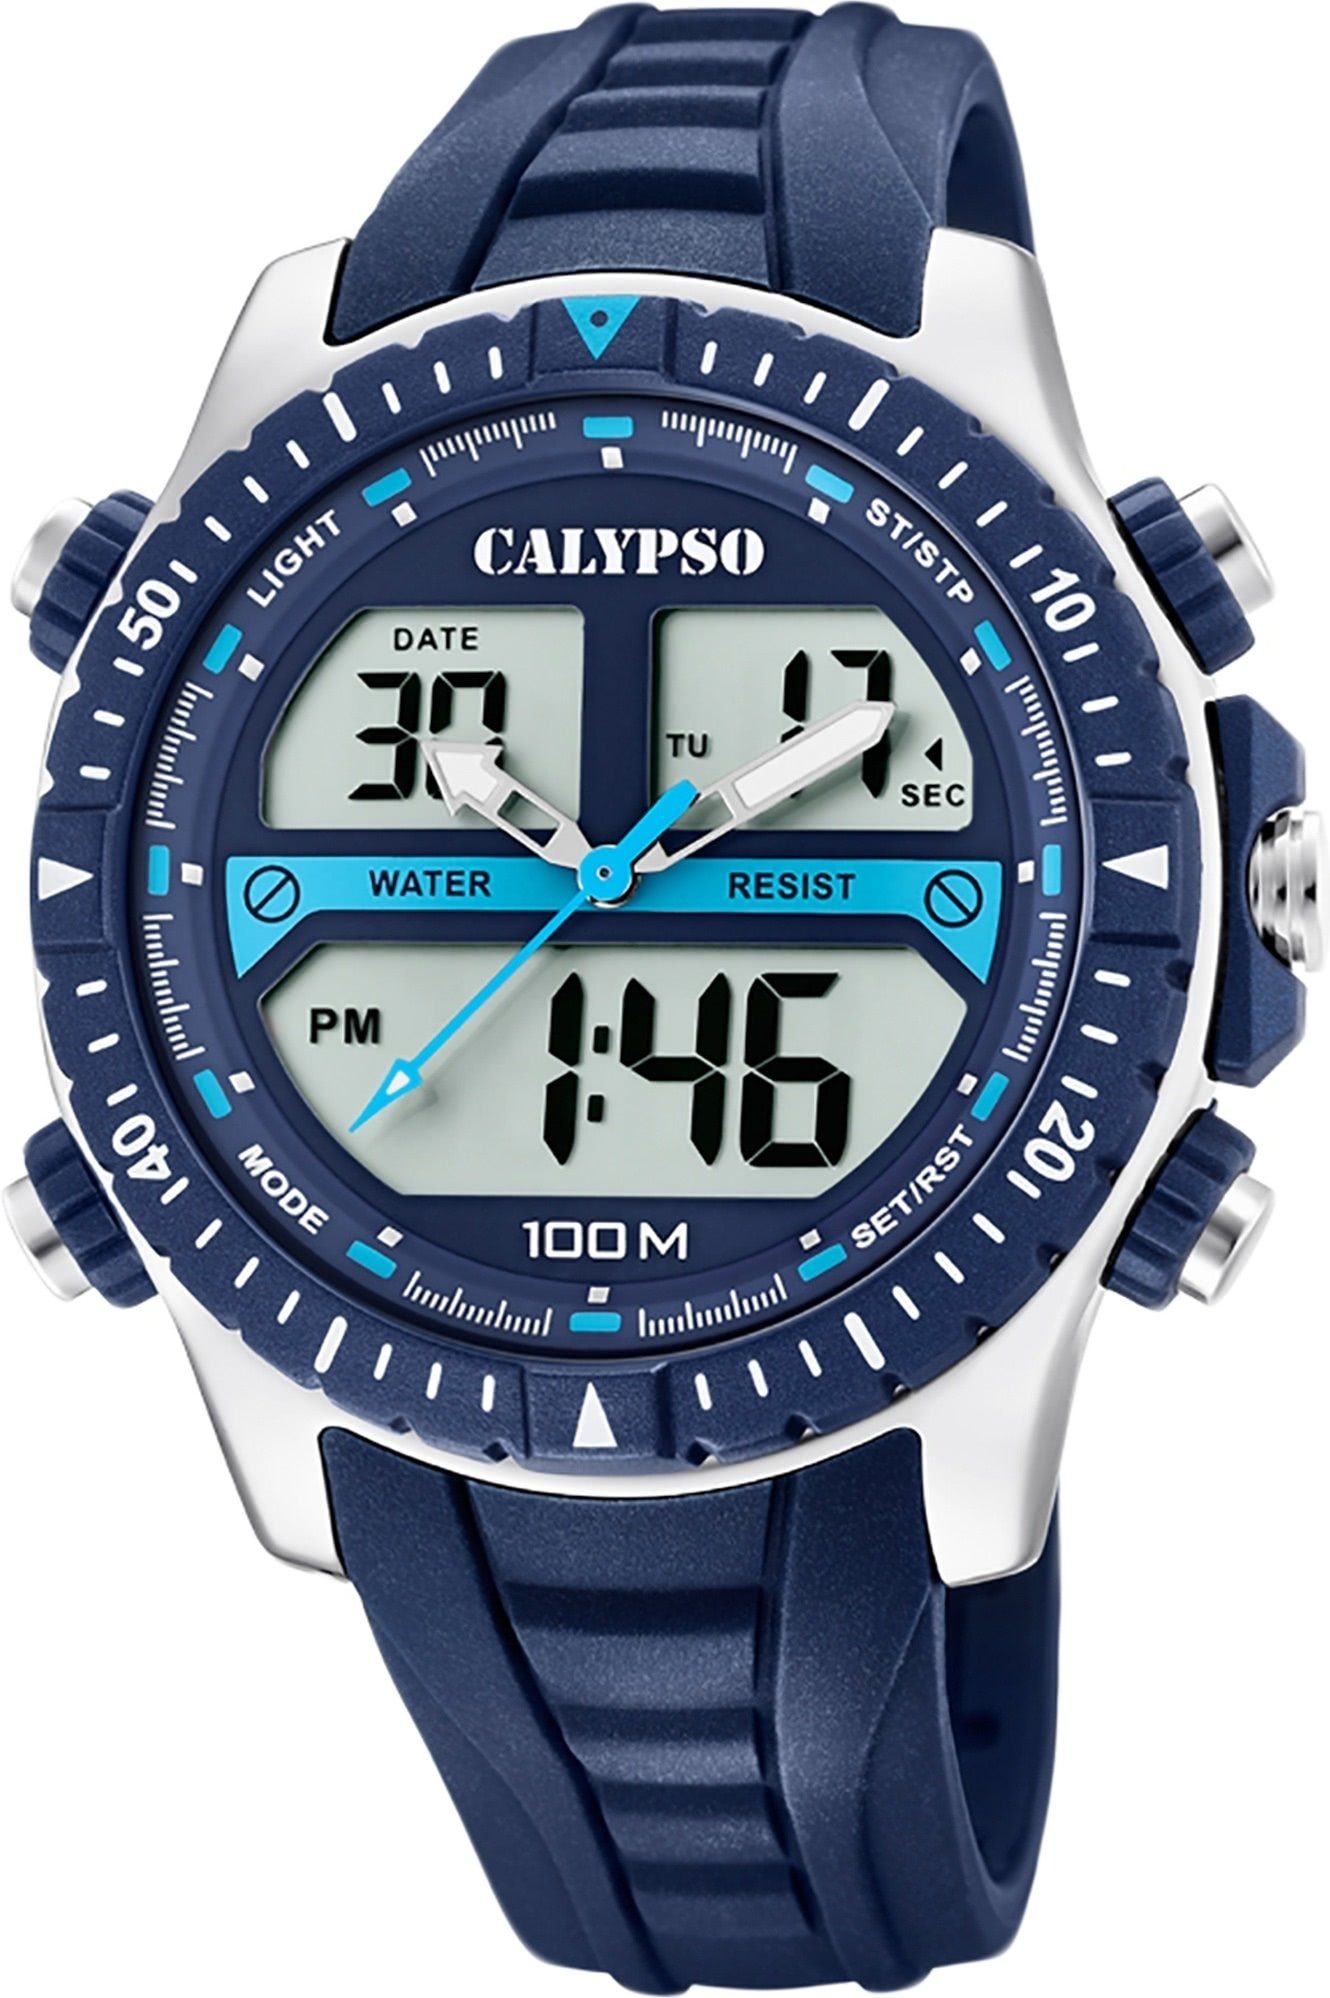 Herren Uhren CALYPSO WATCHES Digitaluhr UK5773/2 Calypso Herren Uhr K5773/2, Herren Armbanduhr rund, Kunststoff, PUarmband blau,